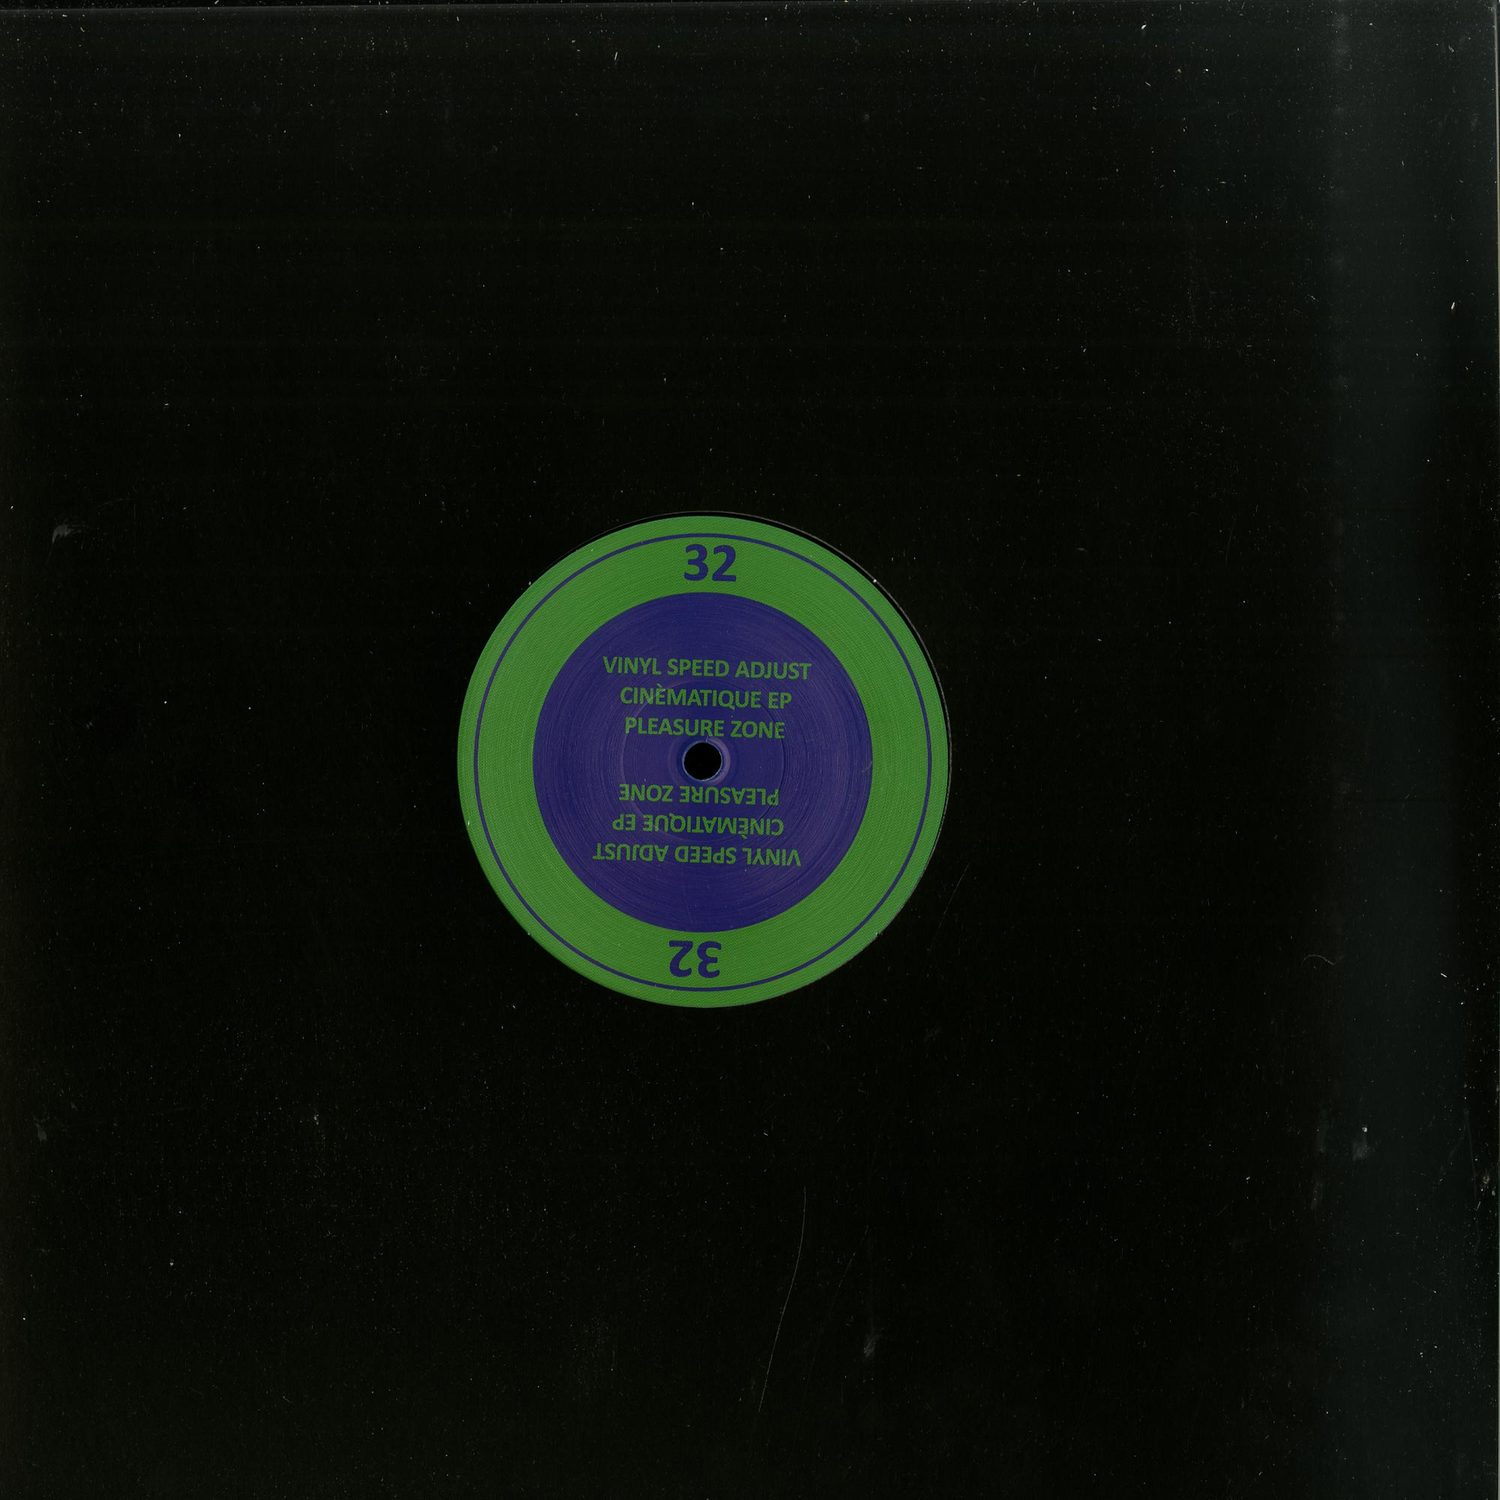 Vinyl Speed Adjust - CINEMATIQUE EP